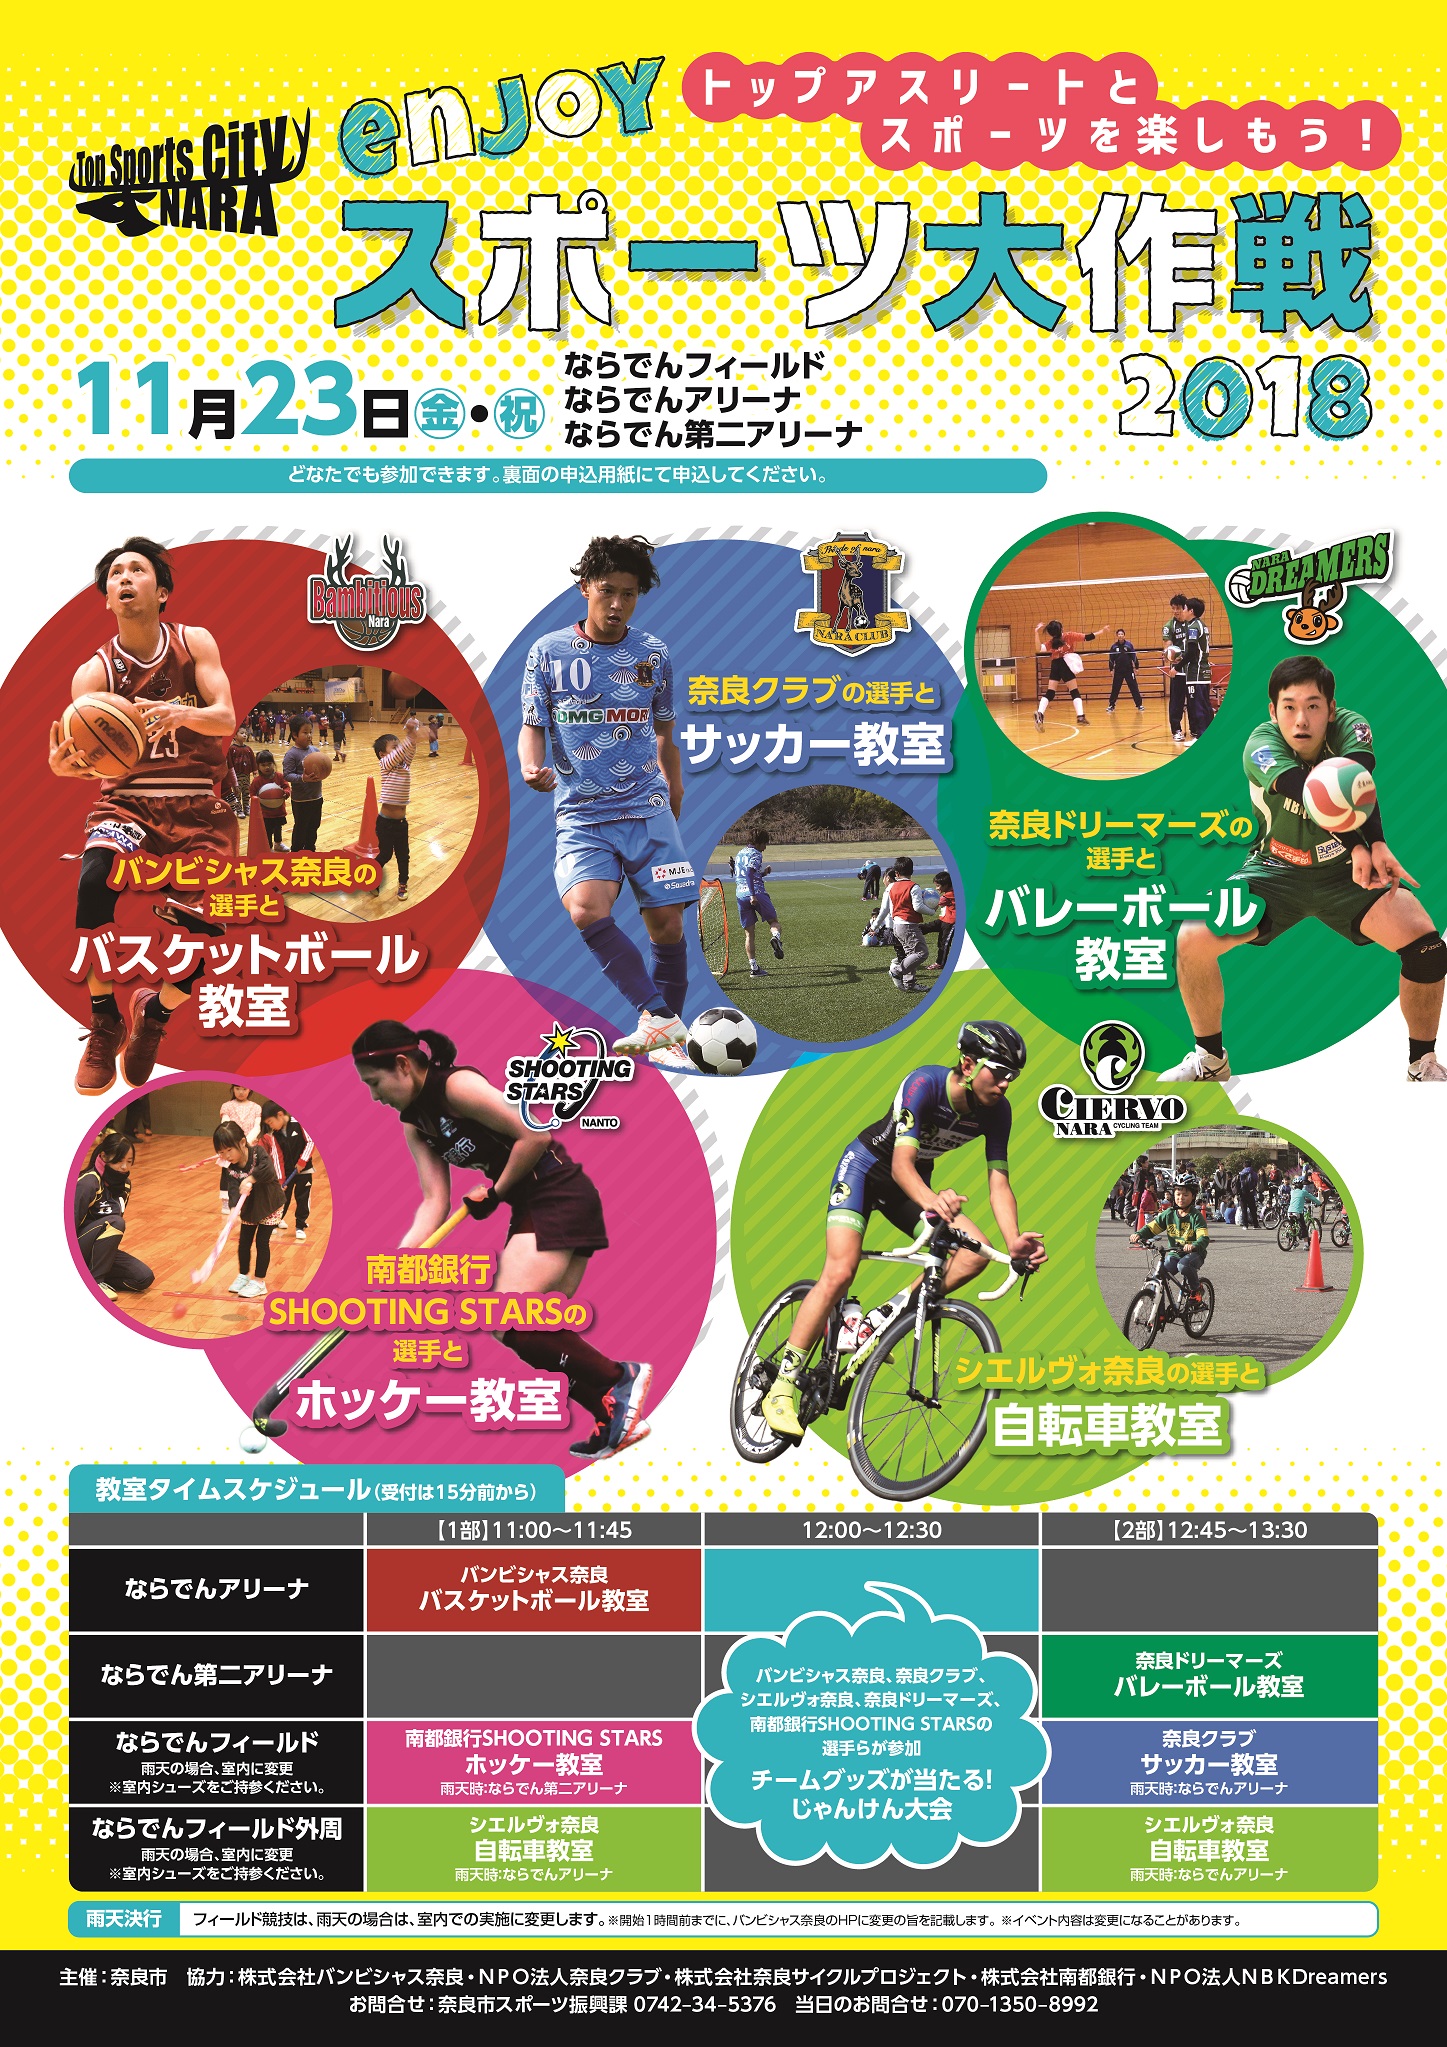 「Top Sports City 奈良enjoyスポーツ大作戦2018」の開催について(平成30年11月22日発表)の画像